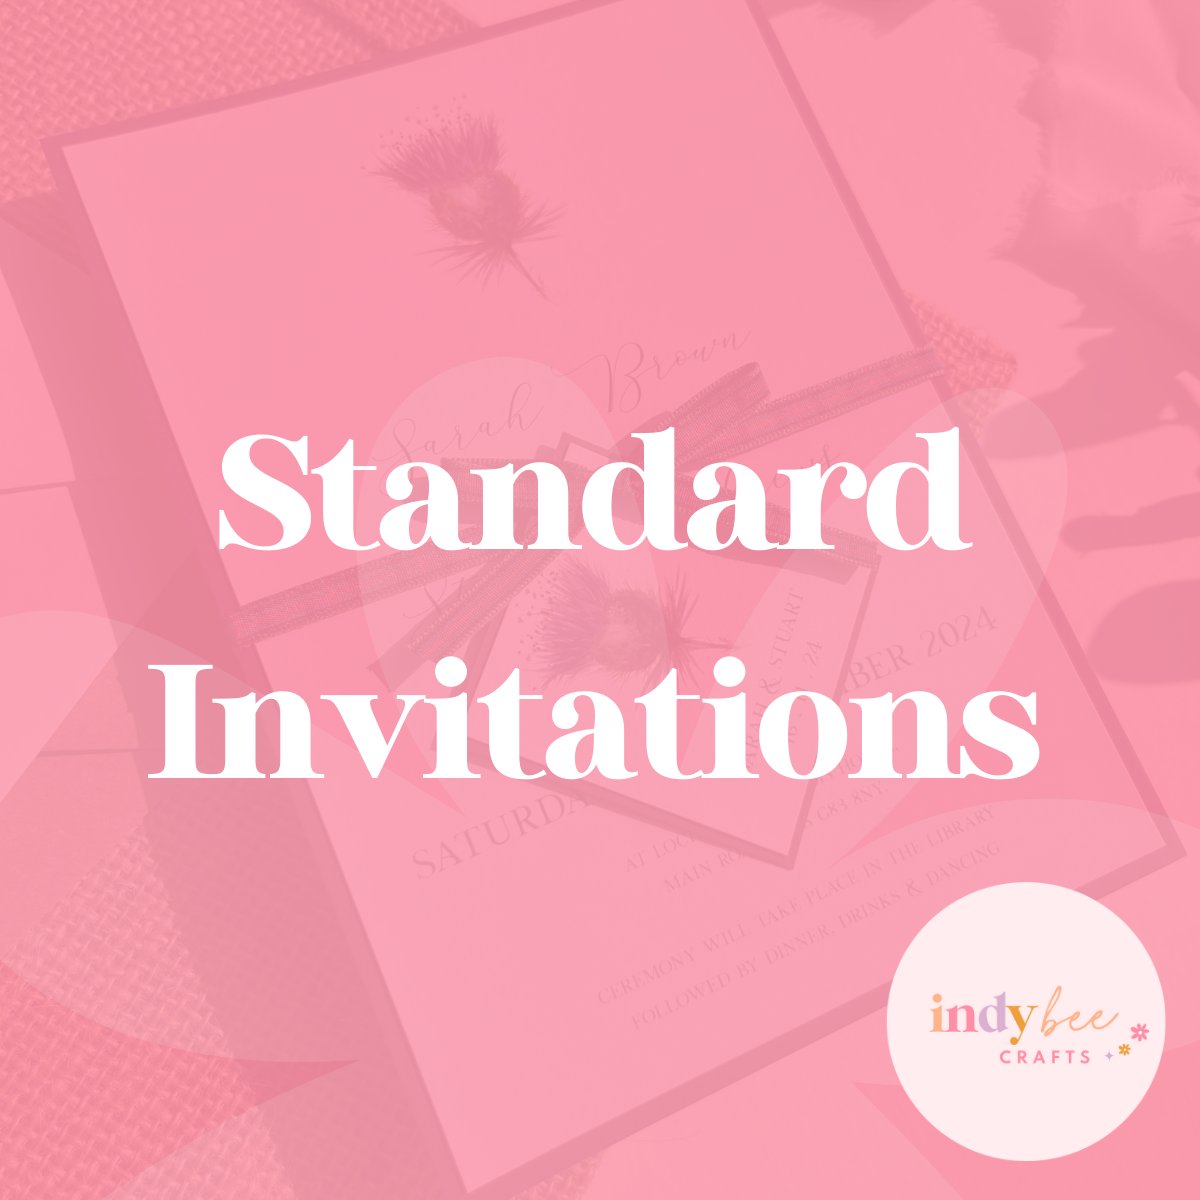 Standard Invitations